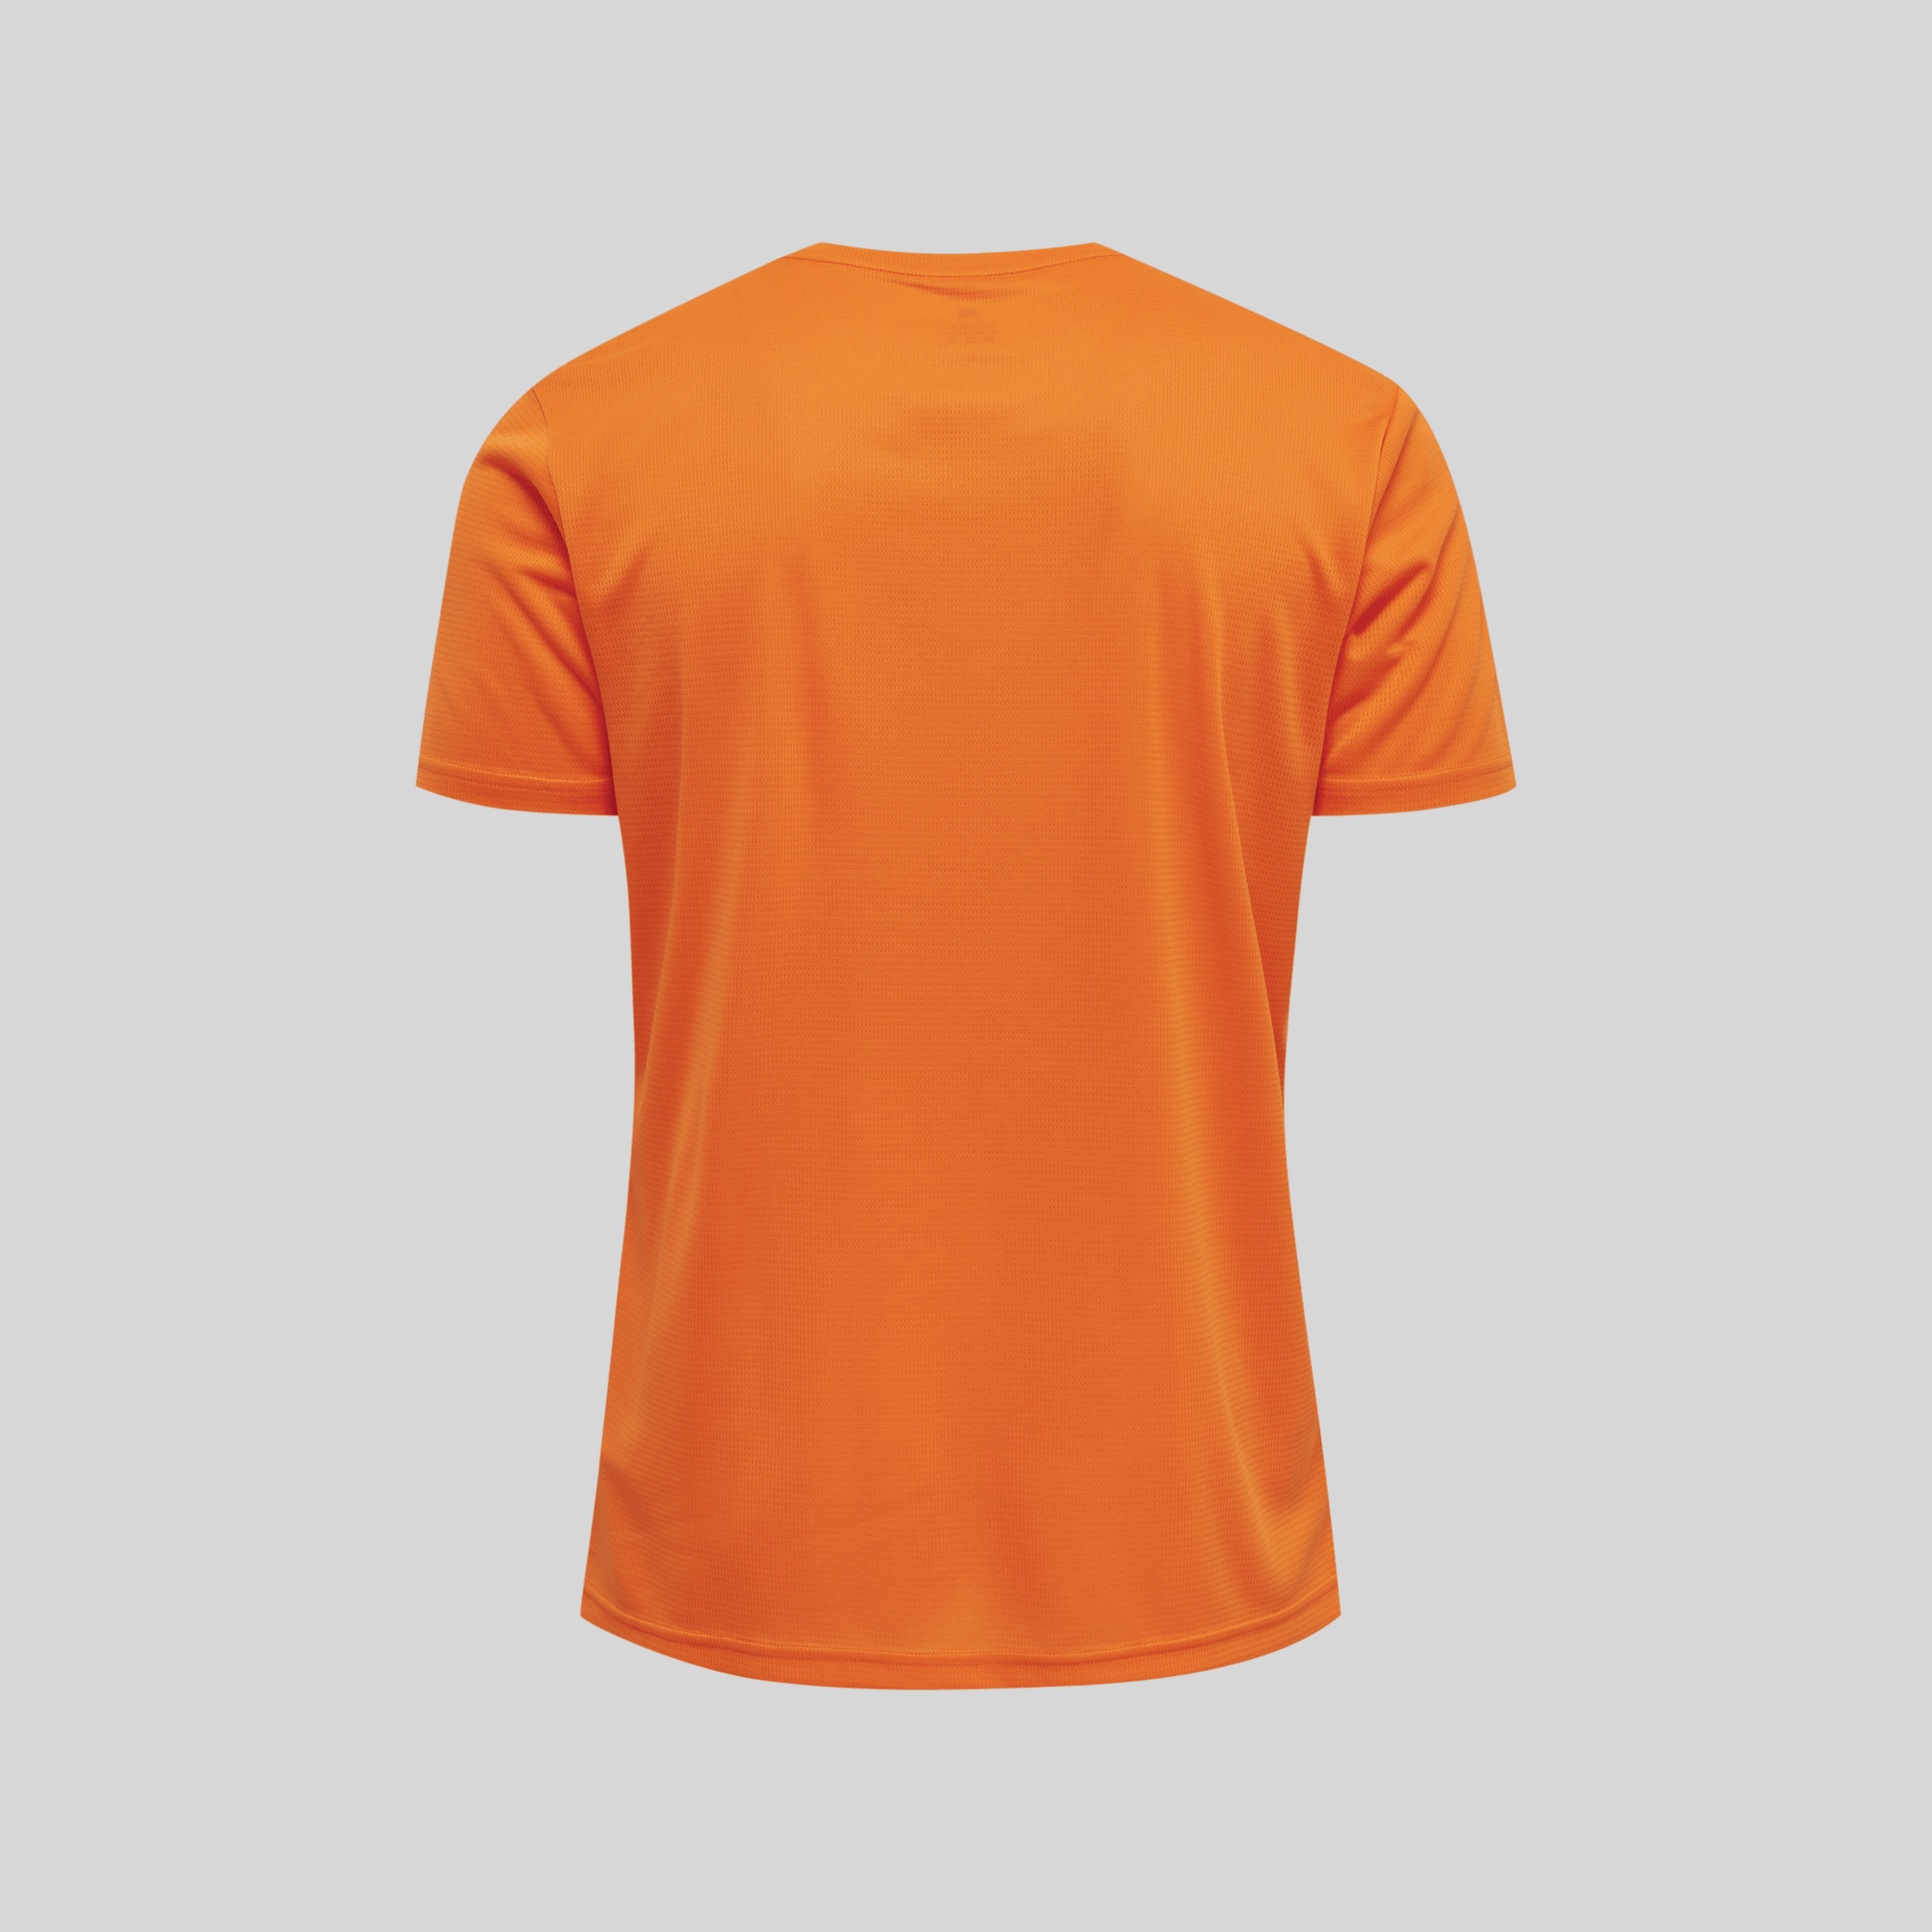 Vigor Tshirt Orange Men's - Sports Cartel